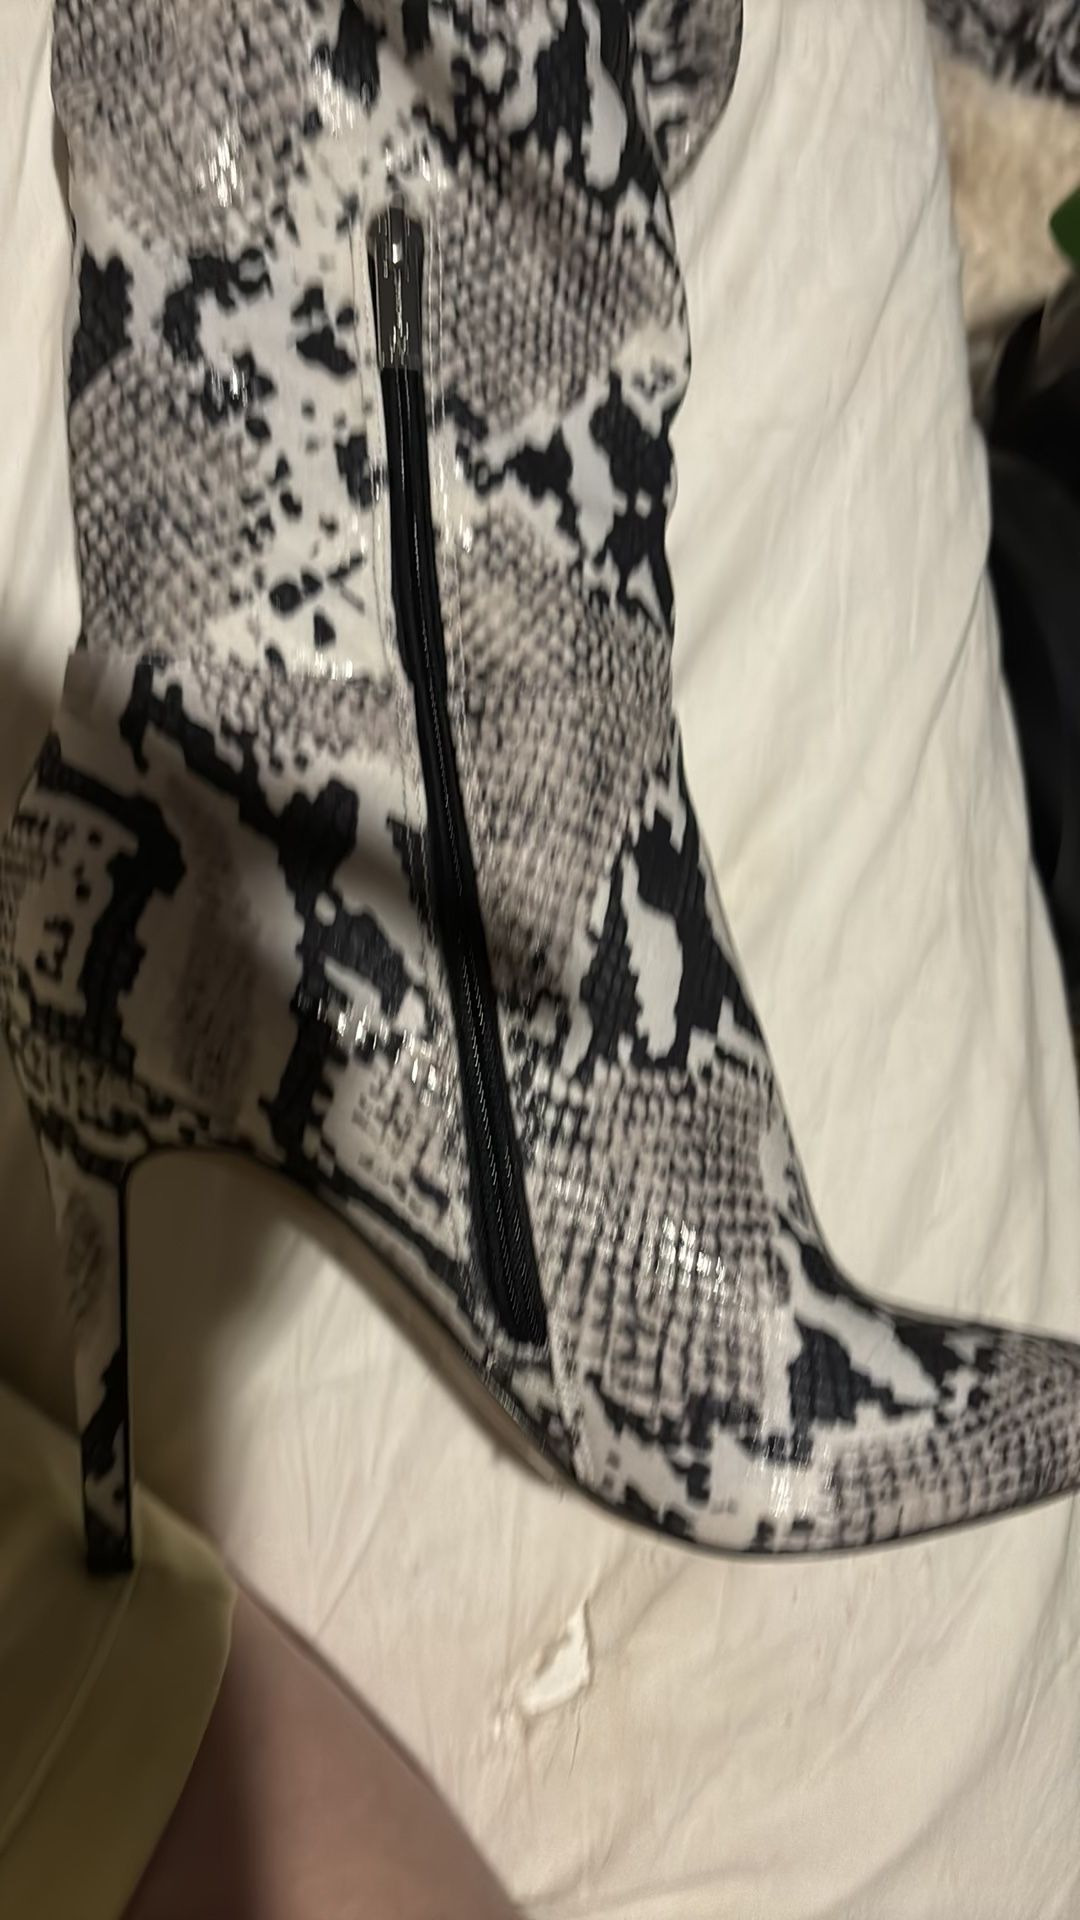 Jessica Simpson Size 9 Boots 